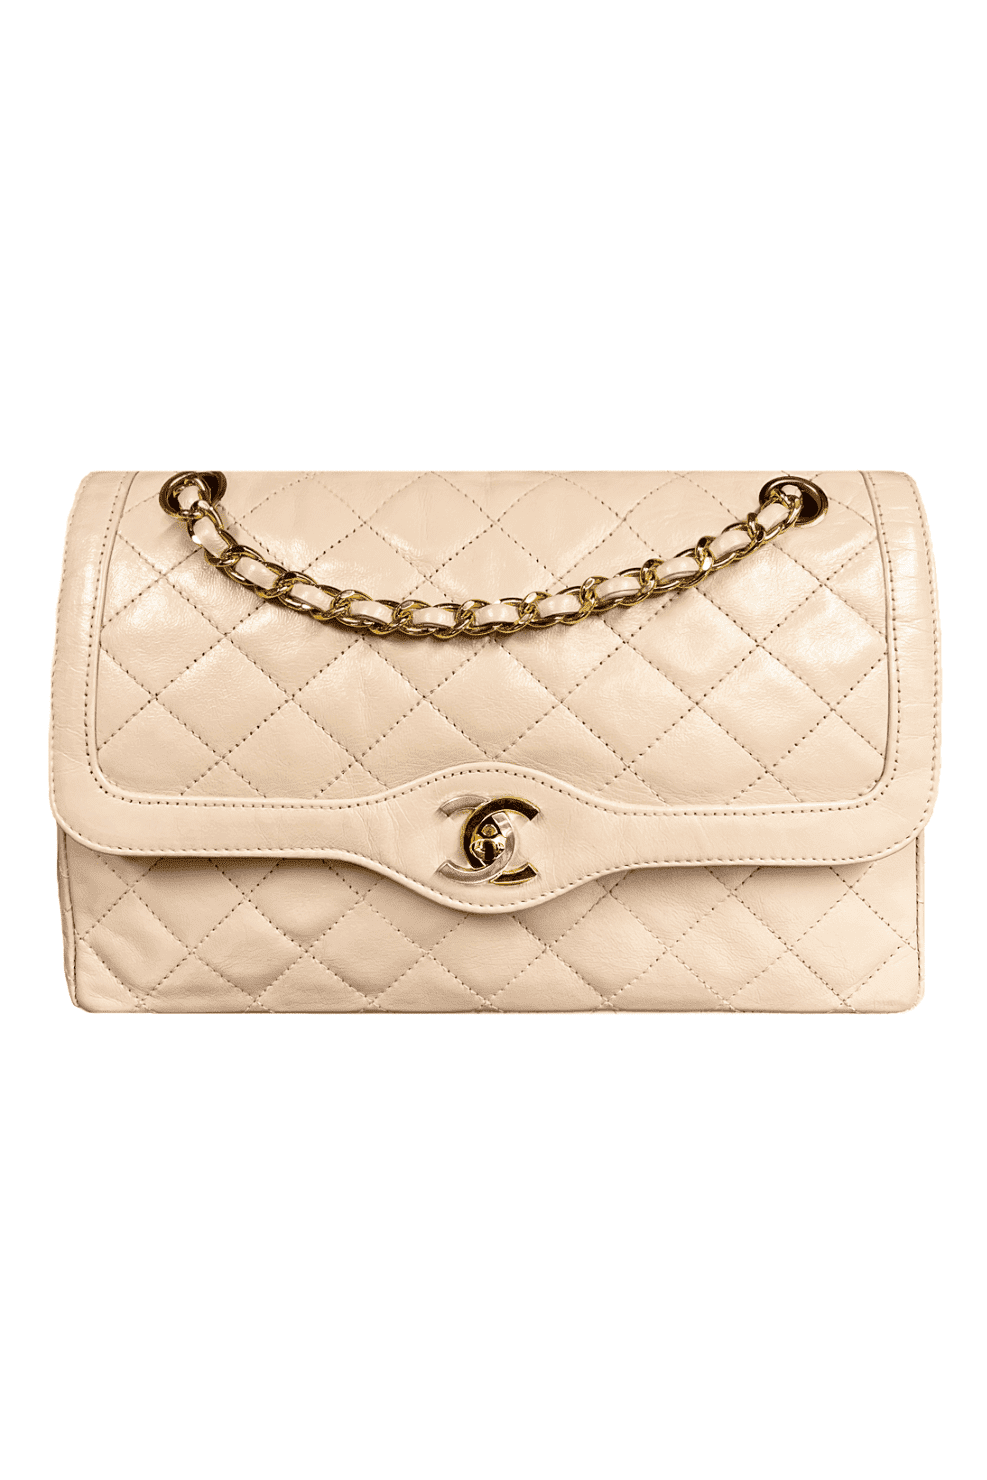 Chanel Chanel Black Ostrich Leather Shoulder bag purse gold chain CC